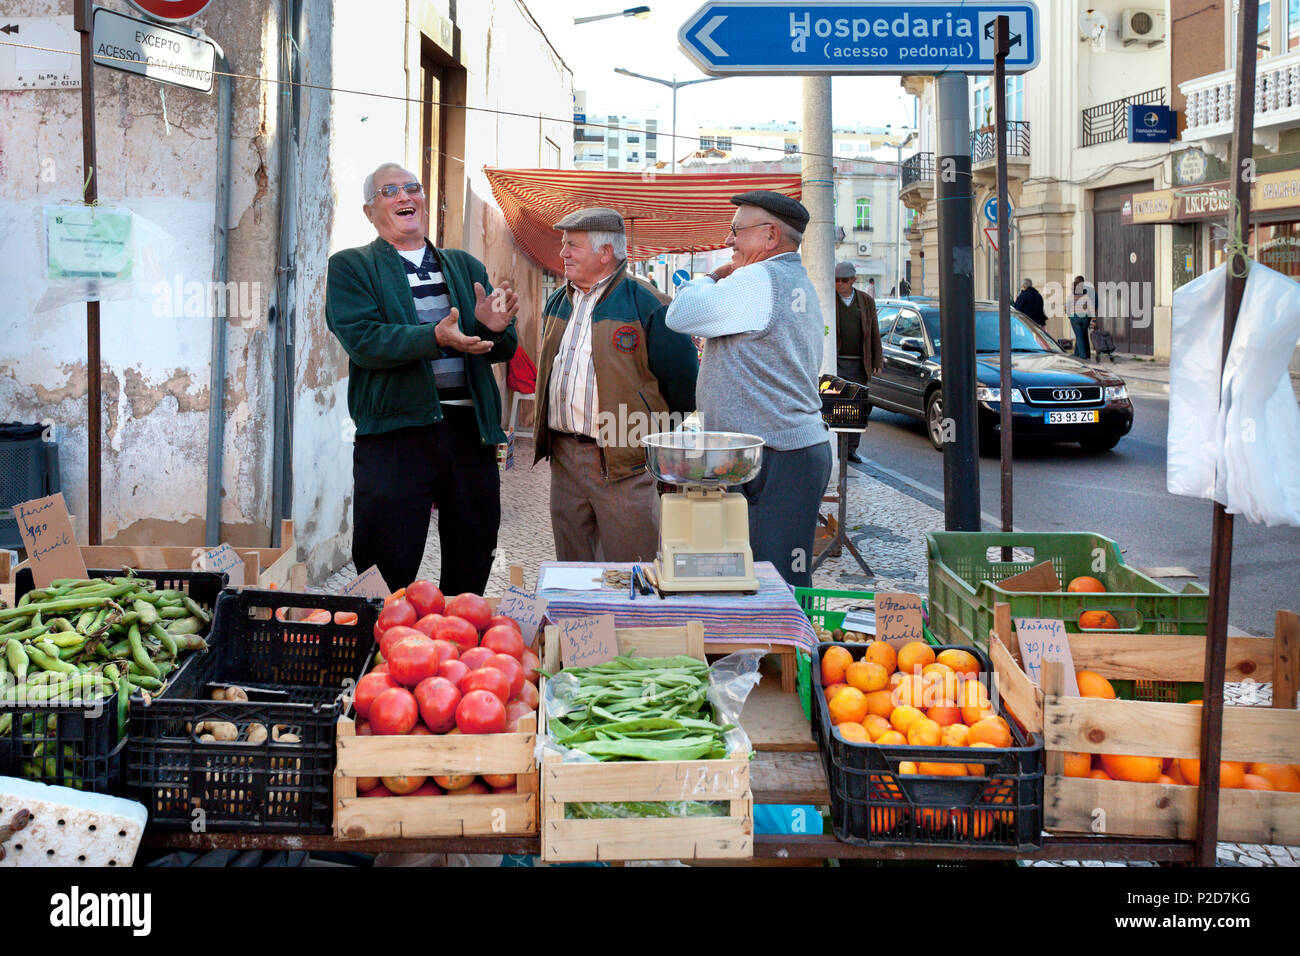 Vegetable stall, Market, Loule, Algarve, Portugal Stock Photo